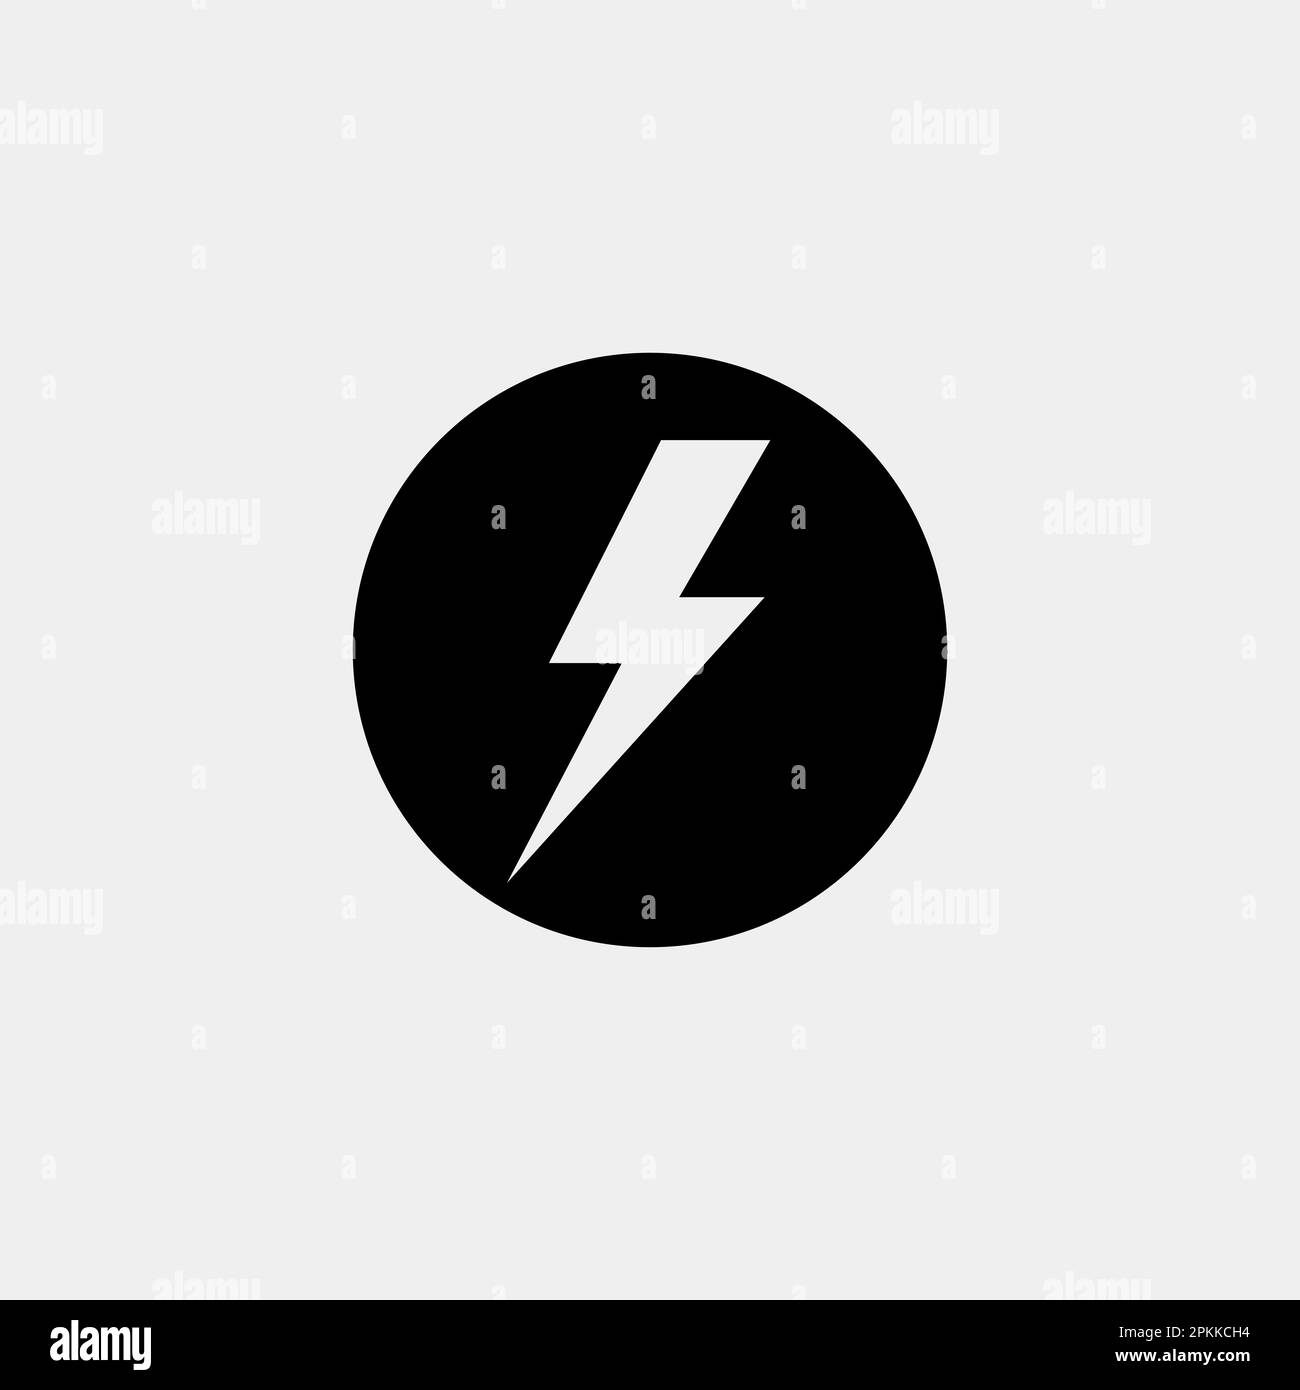 O Letter Logo With Lightning Thunder Bolt Vector Design. Electric Bolt Letter O Logo Vector Illustration. Stock Vector